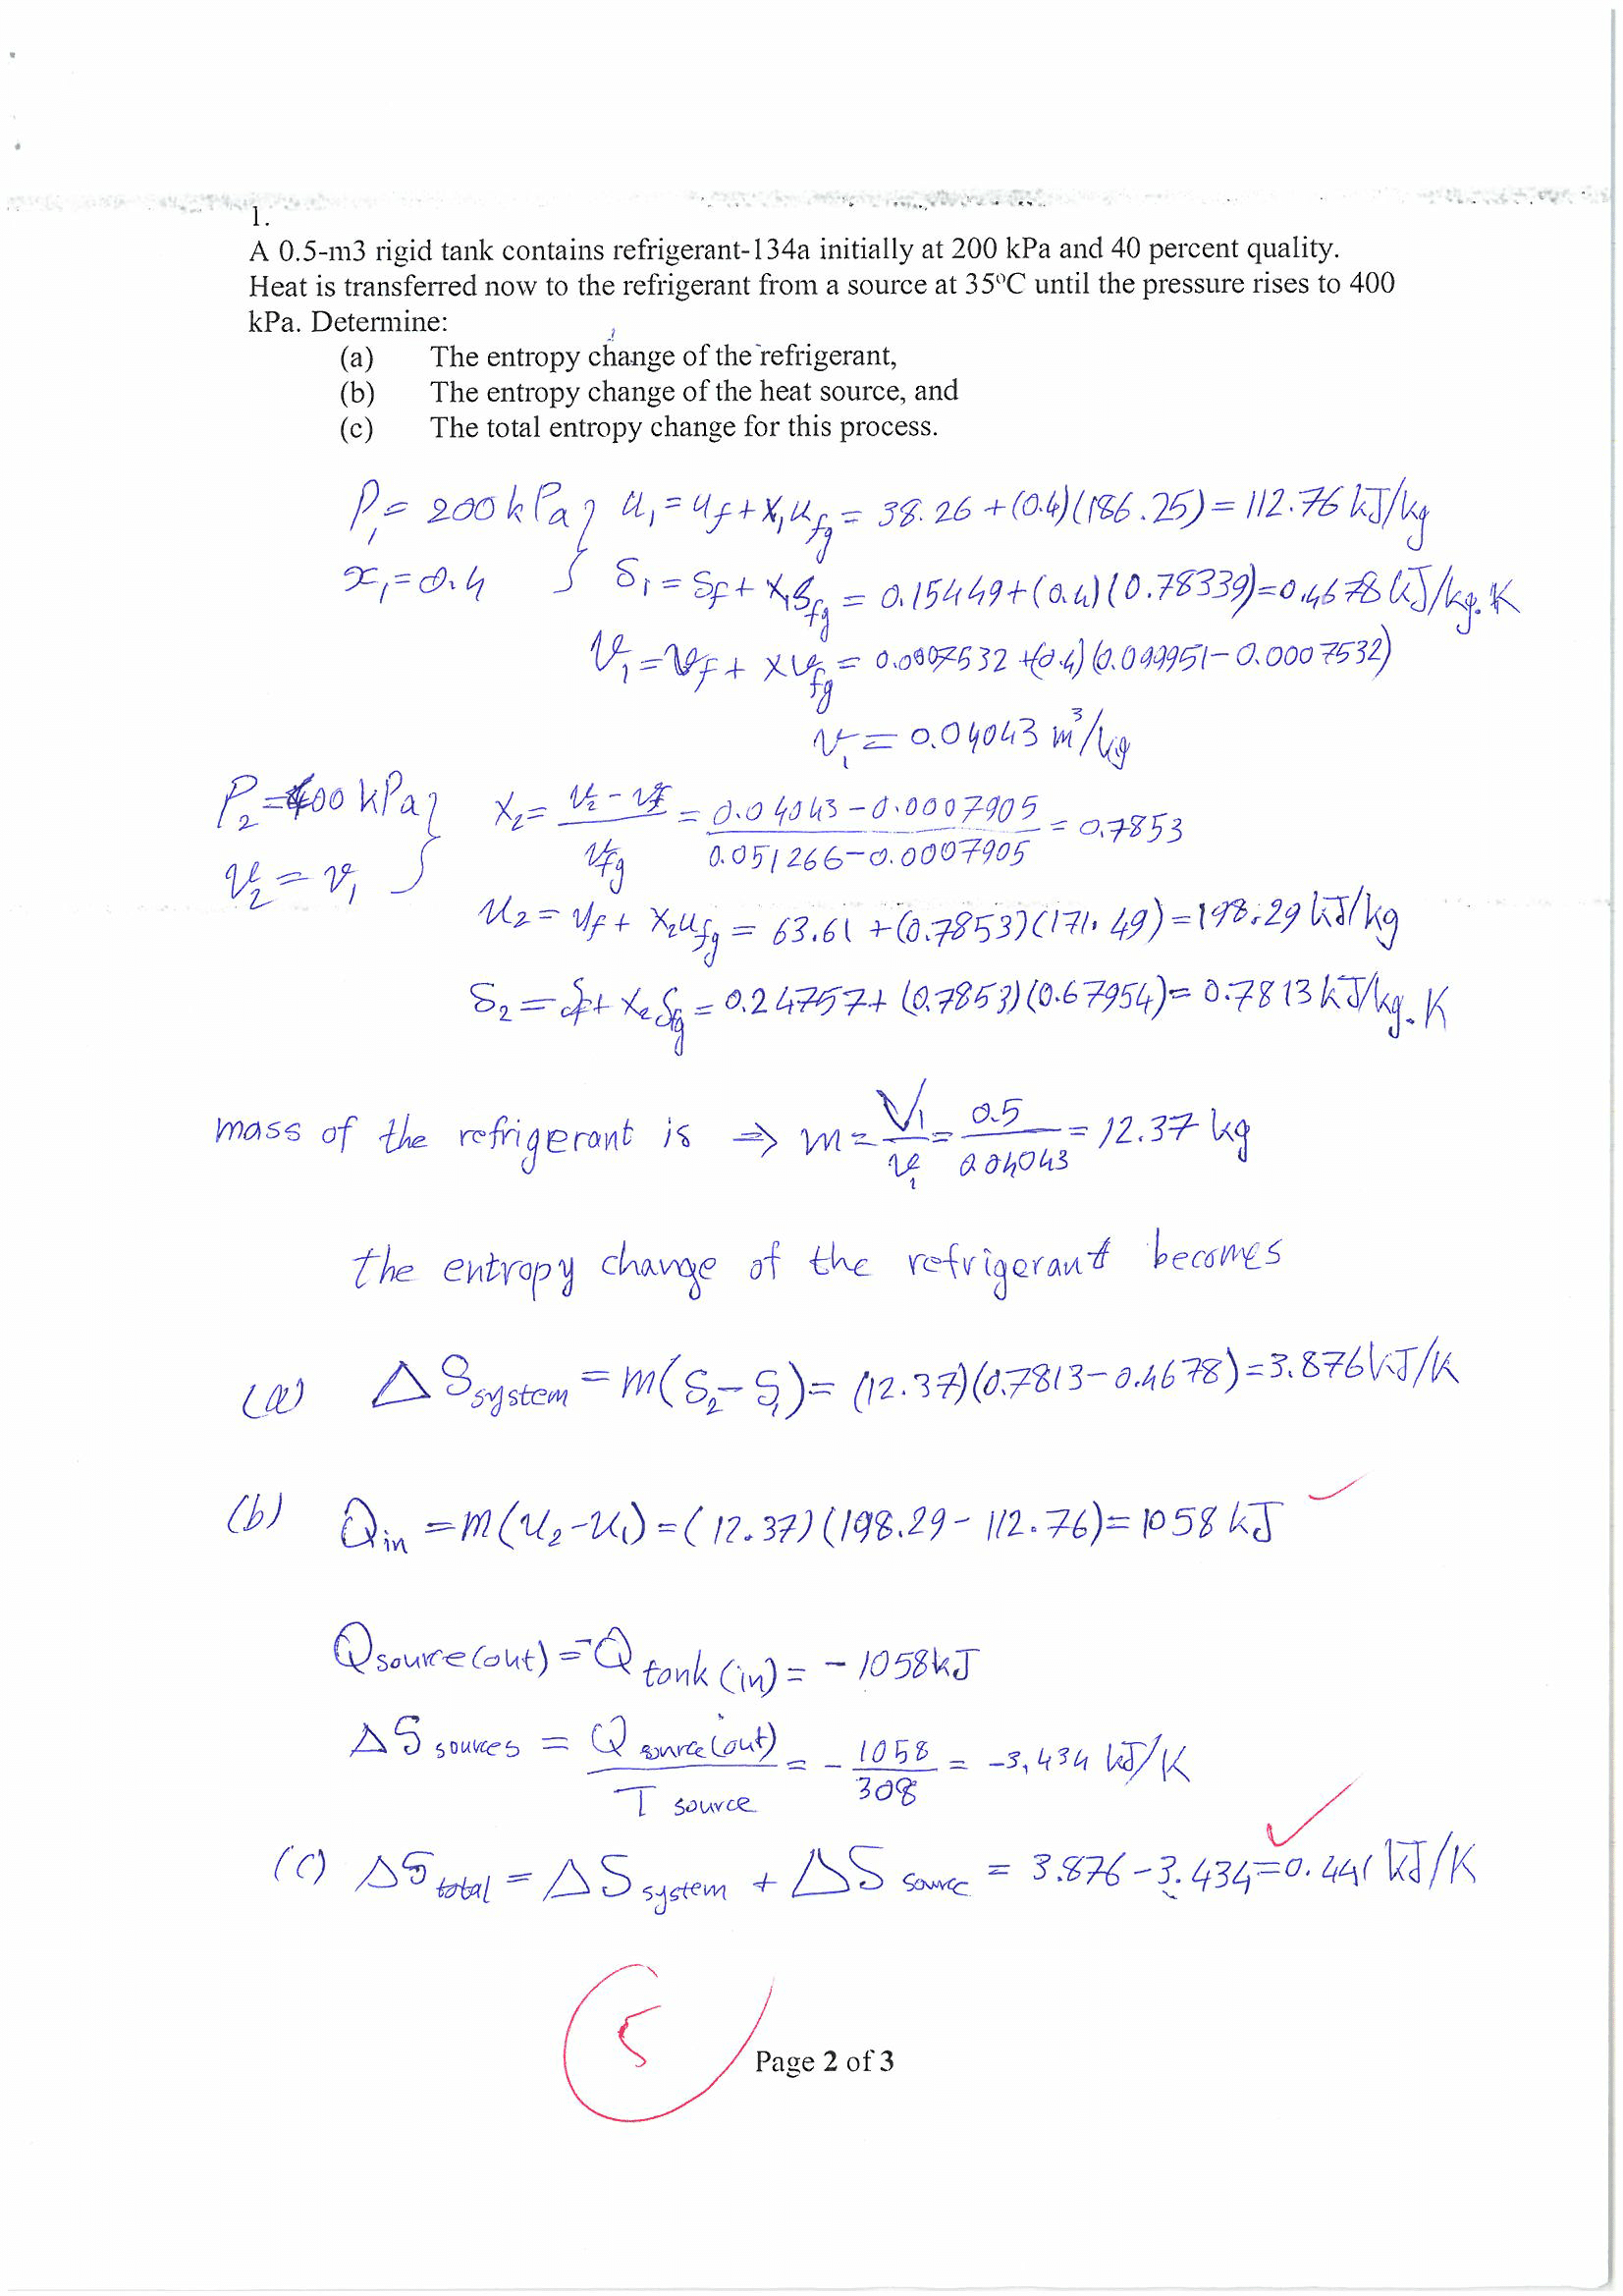 Homework 5 for Thermodynamics 2017